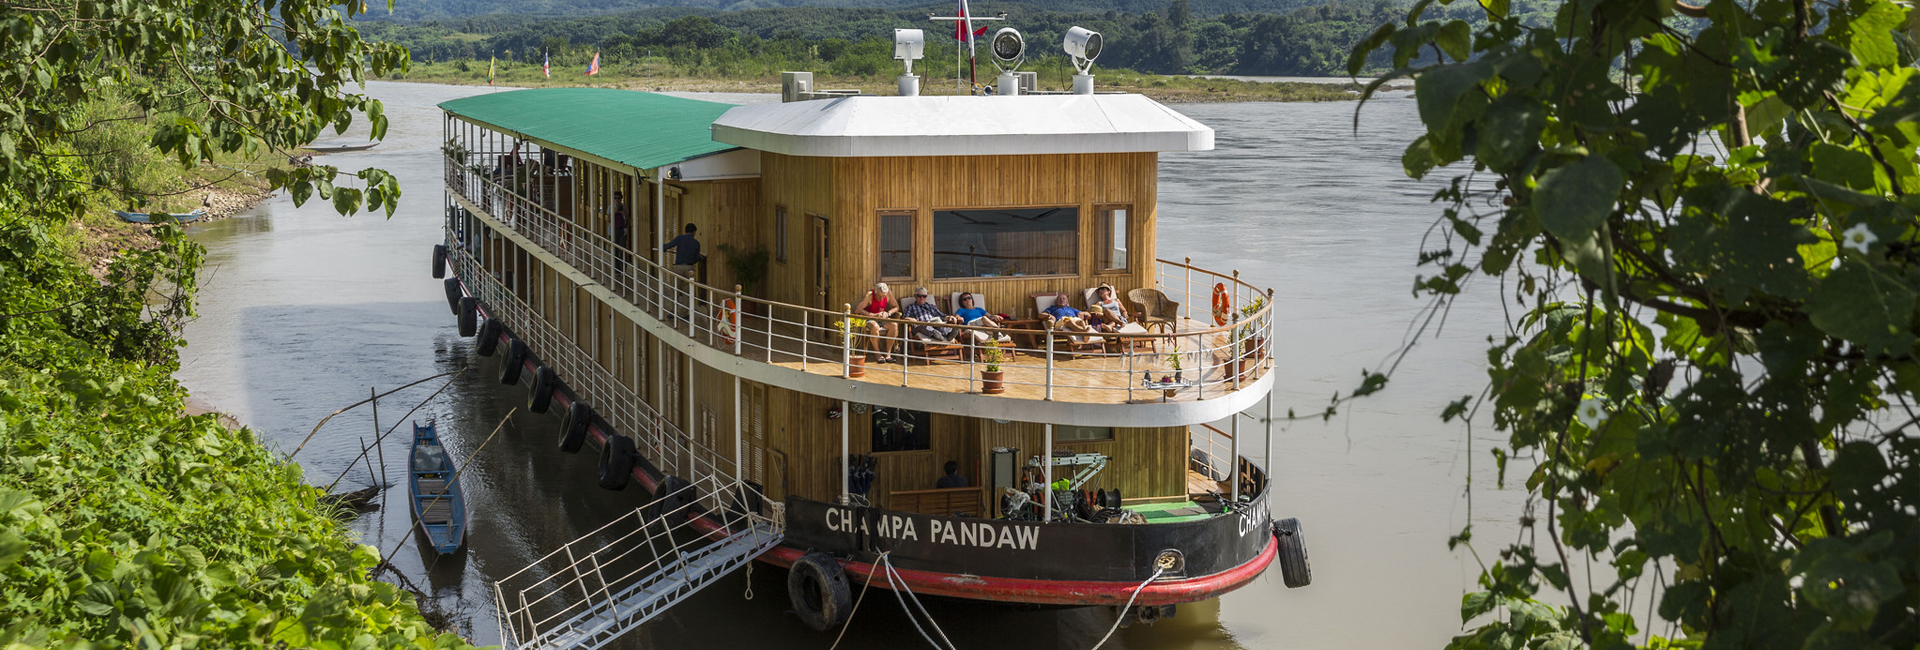 RV Mekong Pandaw Cruise